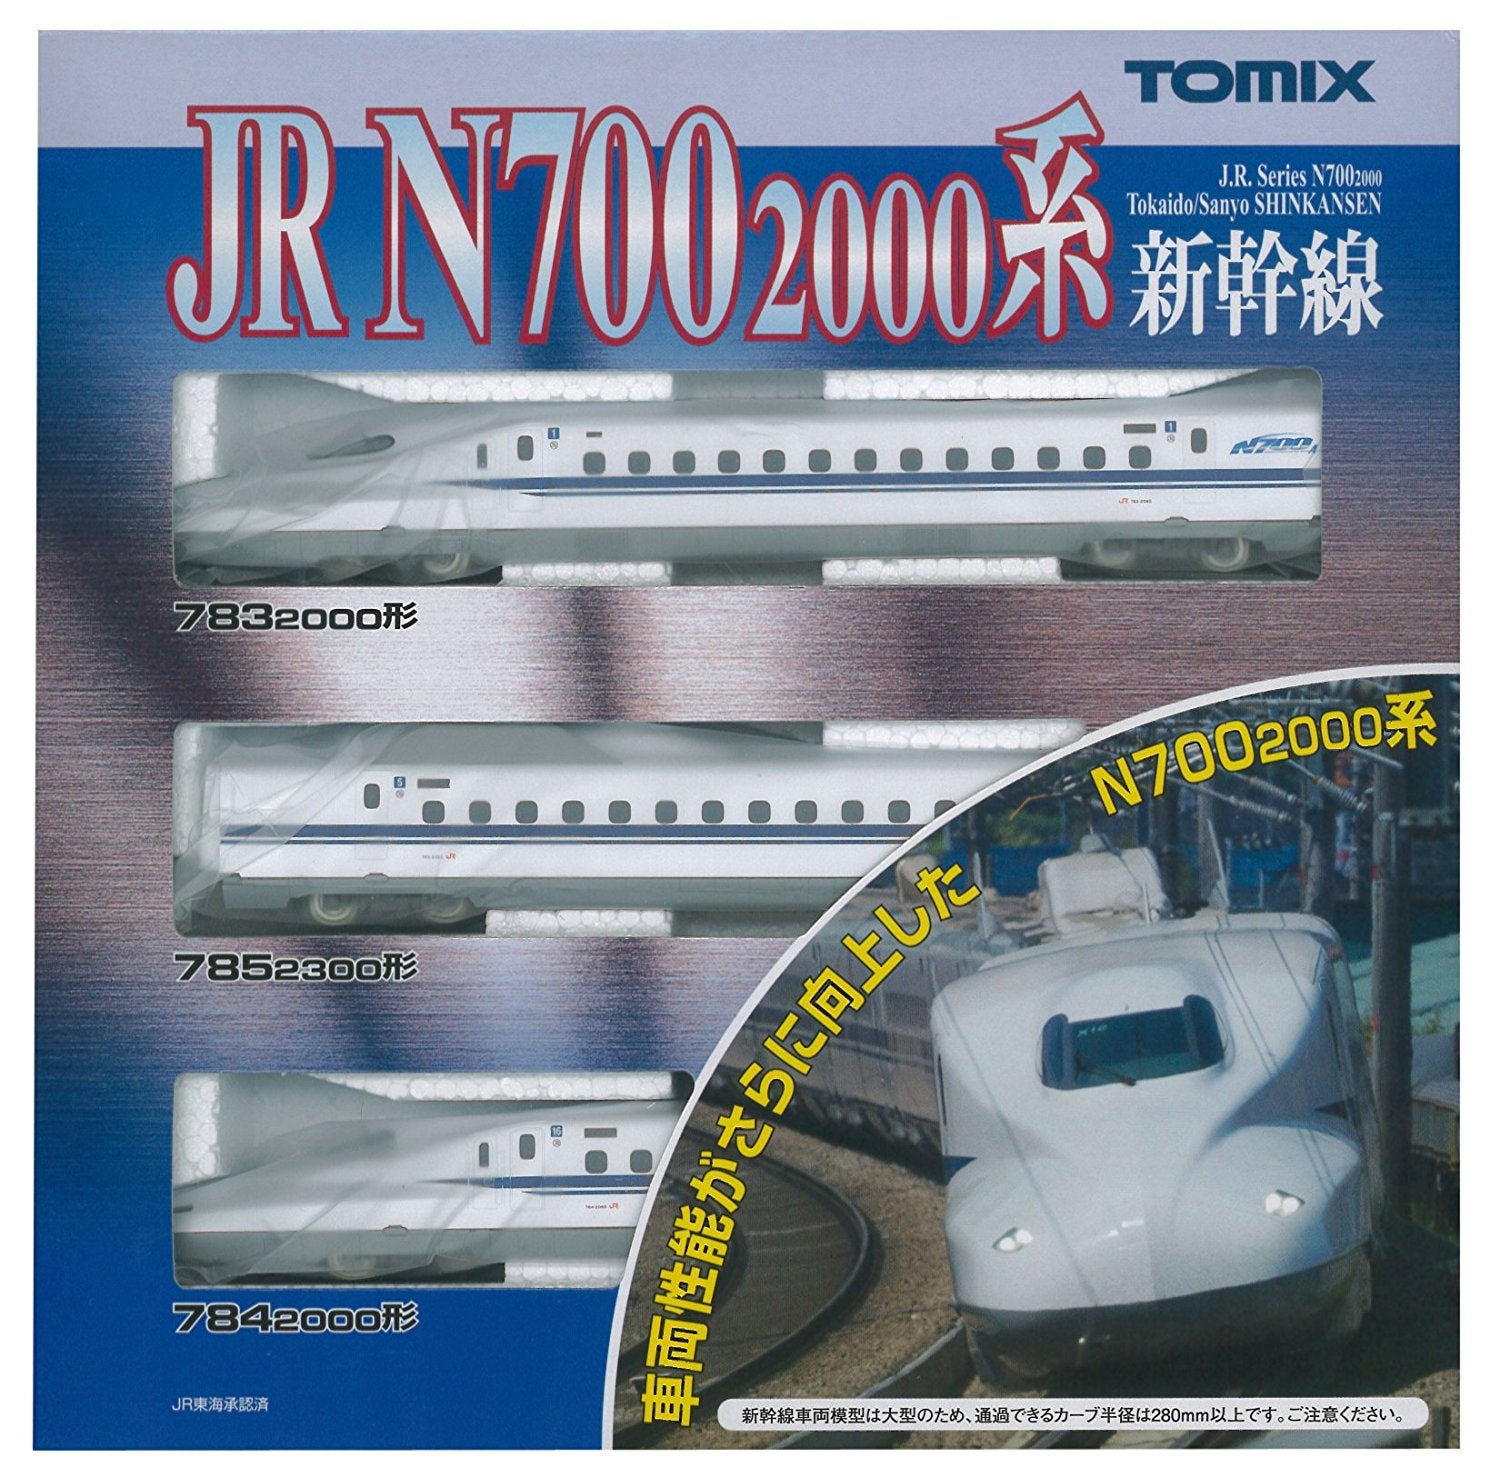 J.R. Series N700-2000 Tokaido/Sanyo Shinkansen (Basic 3-Car Set)